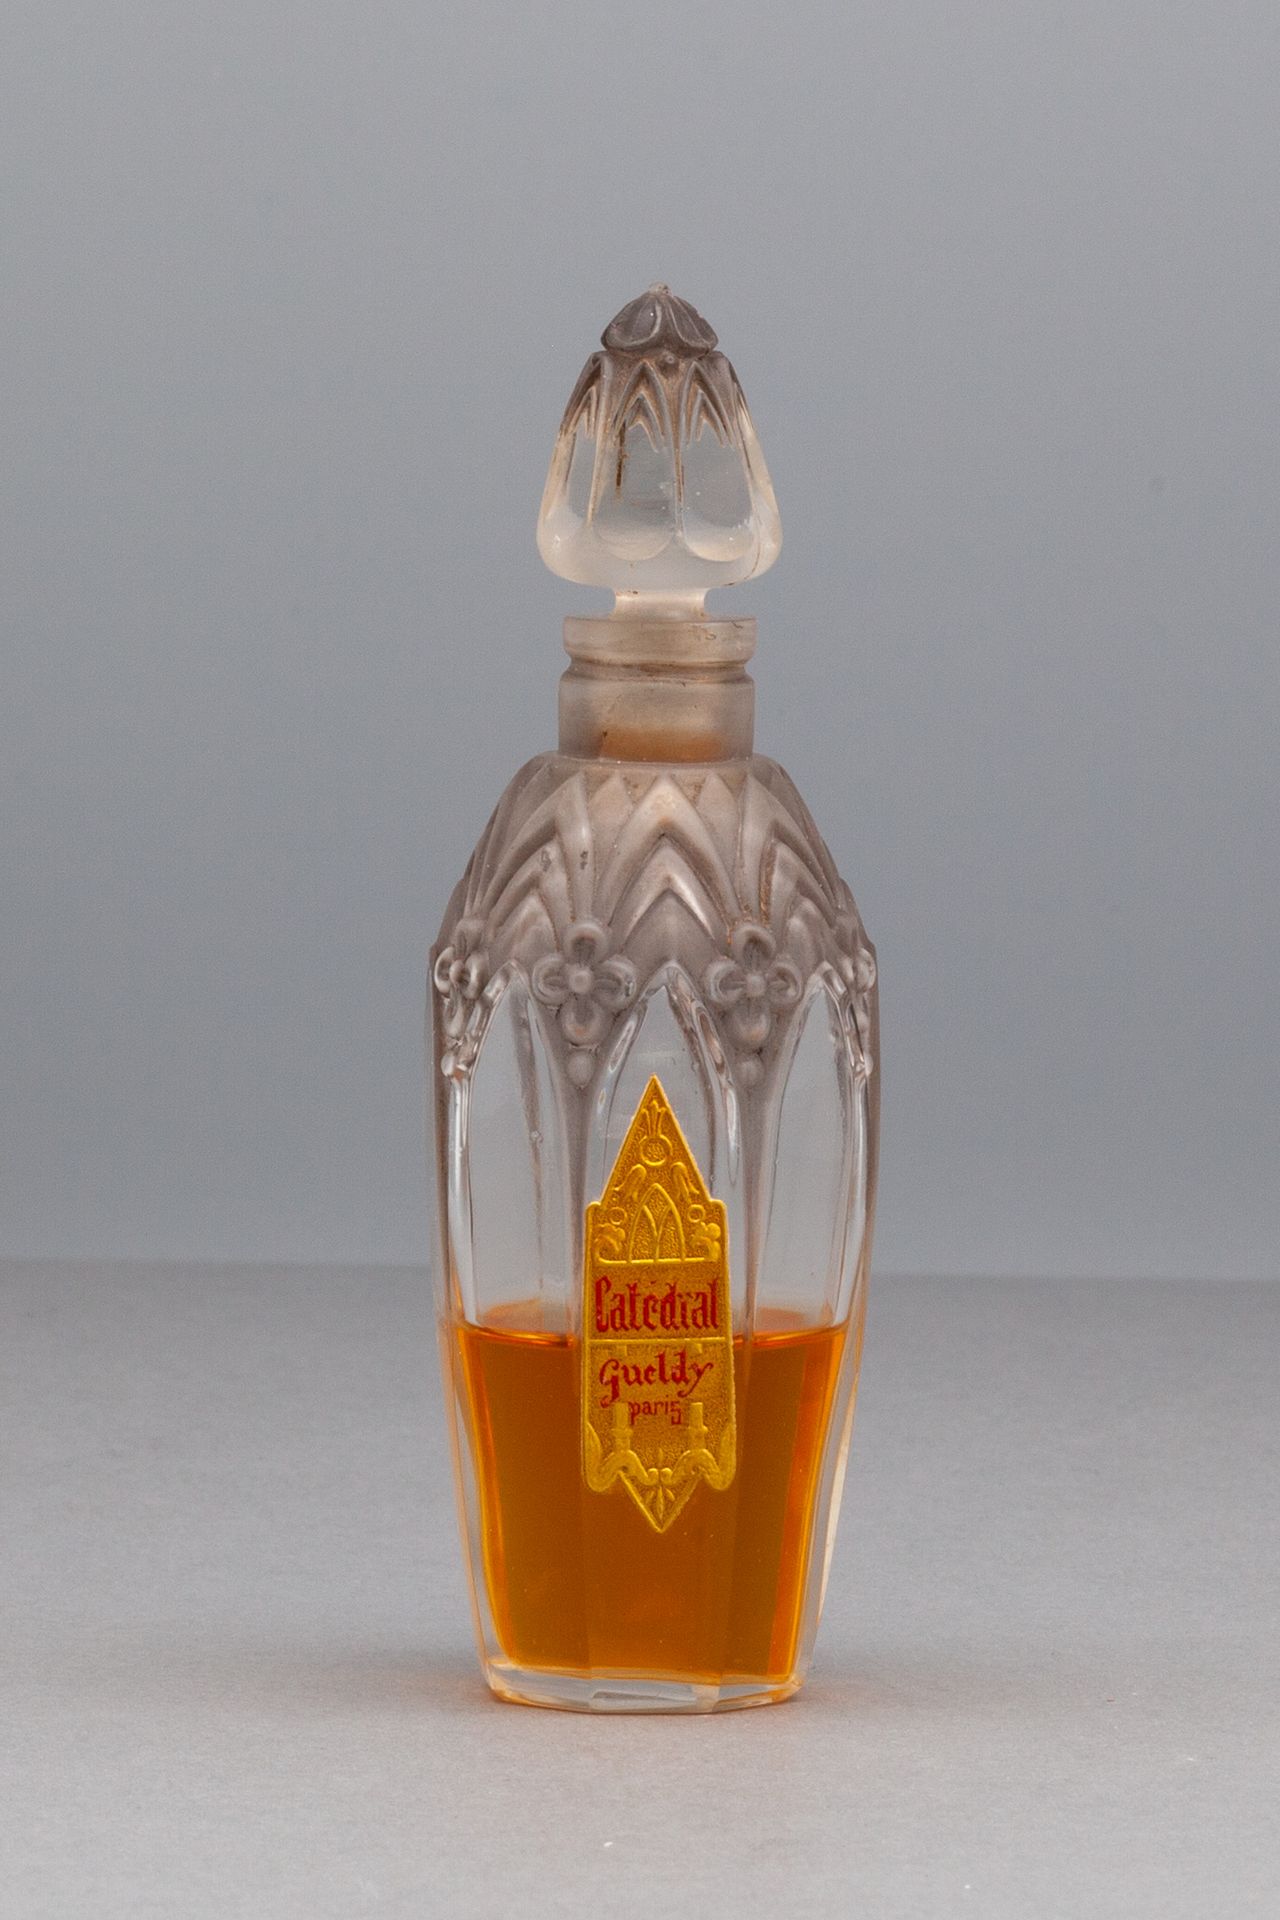 GUELDY "CATEDRAL" 橄榄形玻璃瓶，有花朵装饰。镀金和标题的标签。瓶塞上装饰着风格化的花朵。